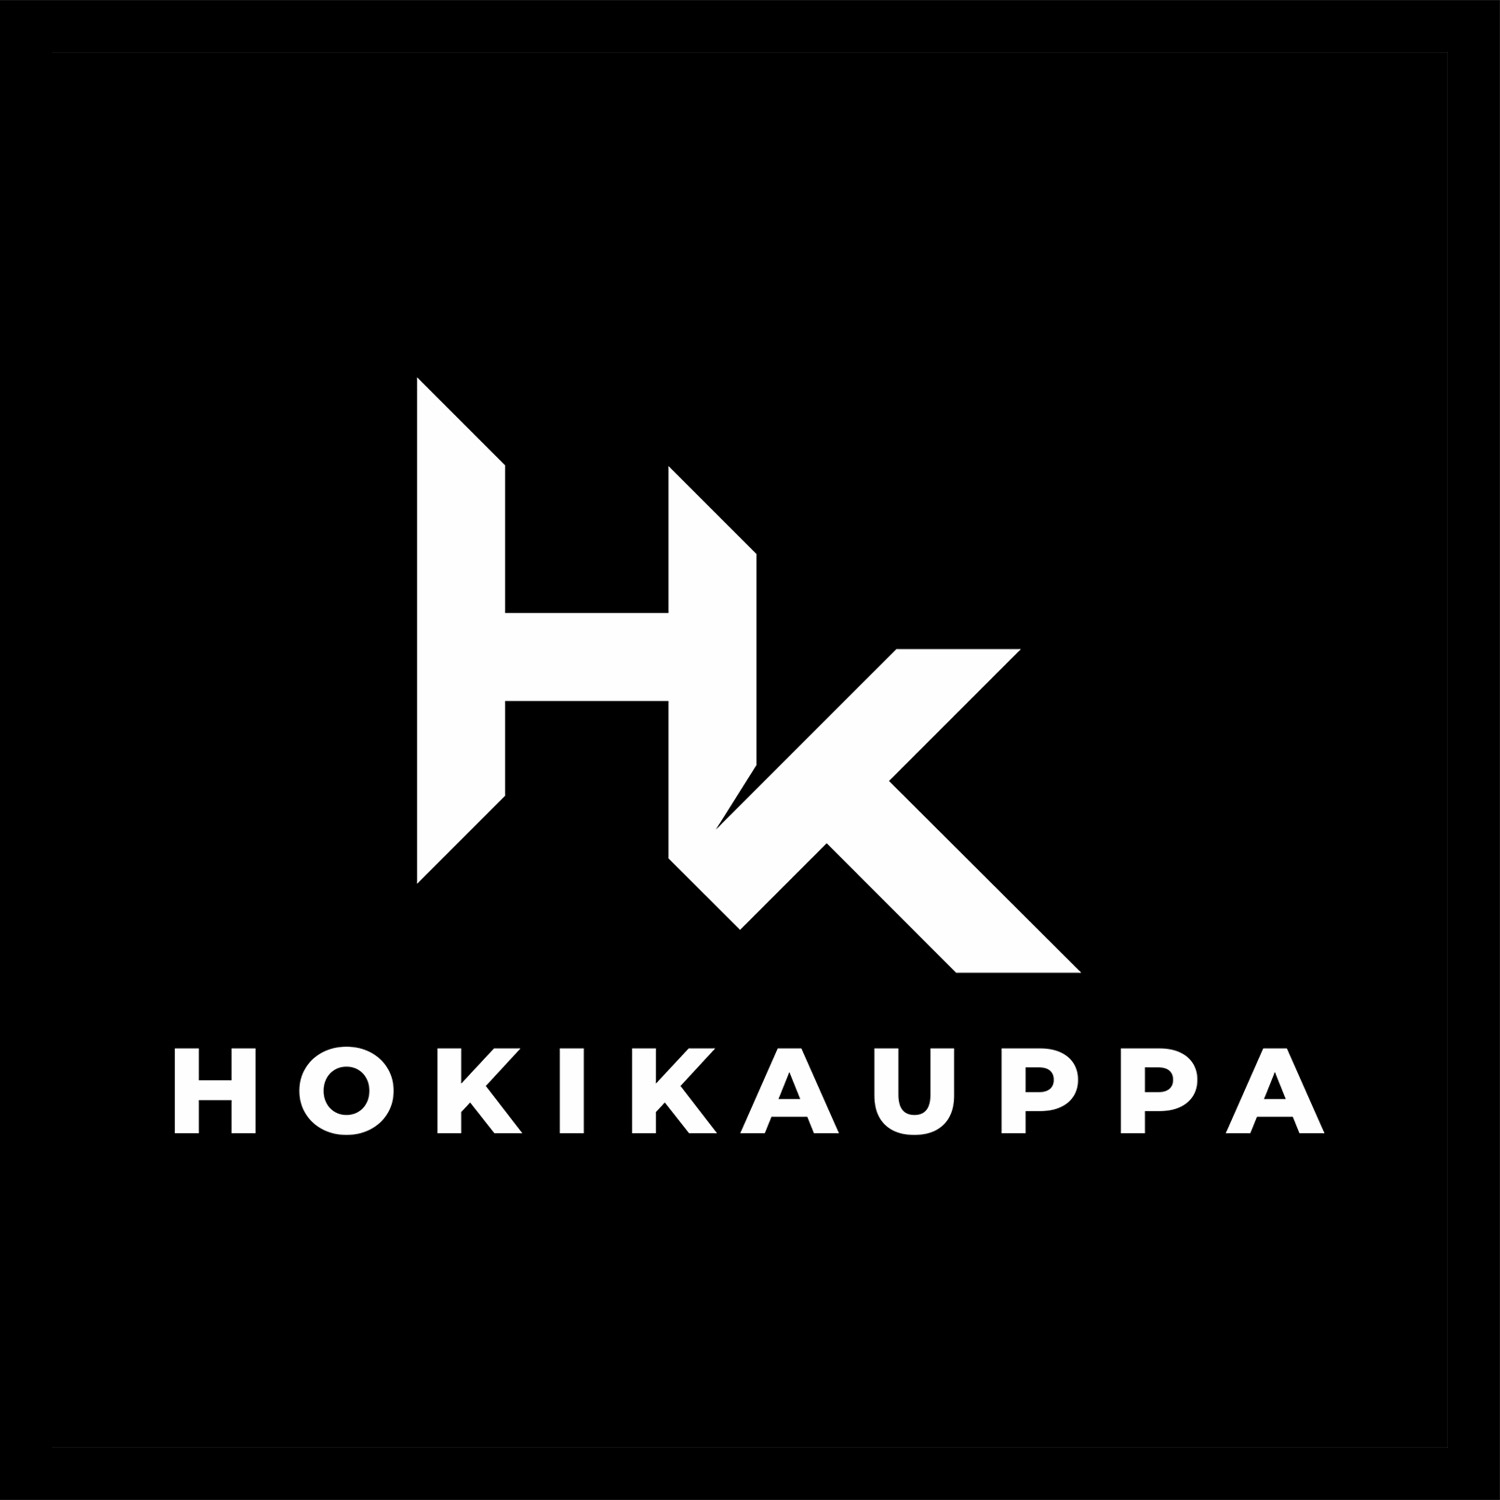 Logo, Hokikauppa, made by Therwiz Design